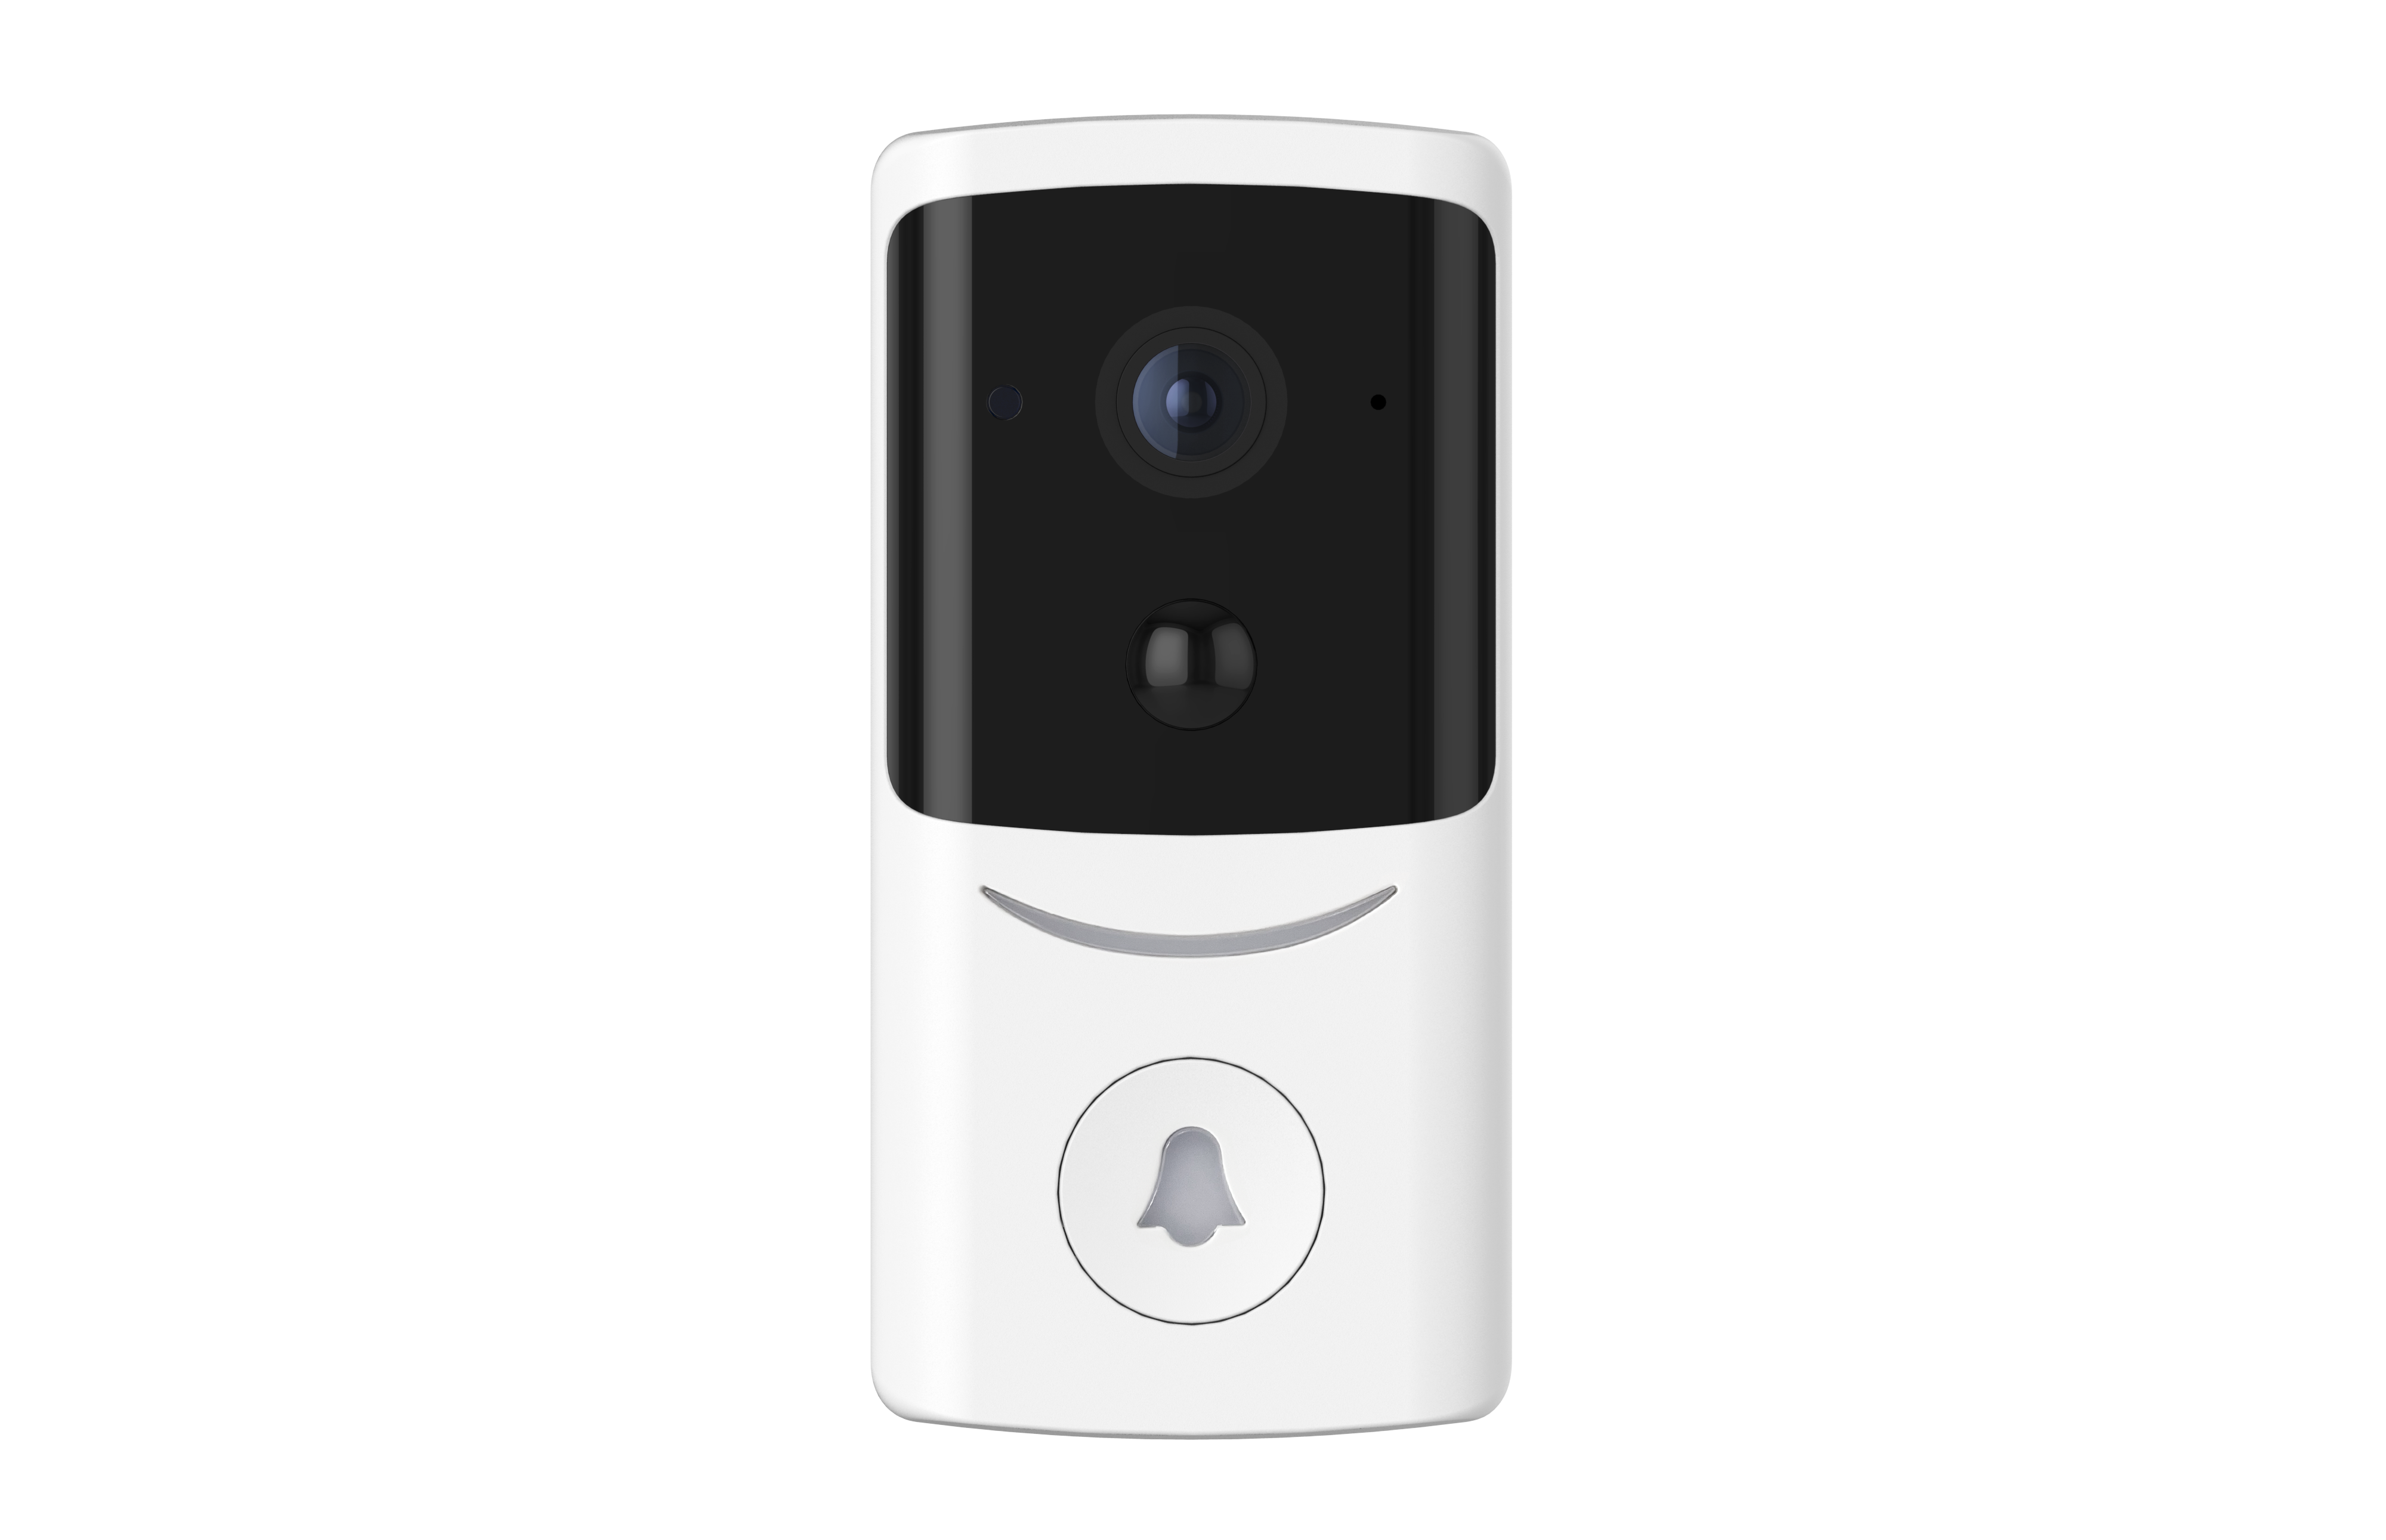 Camera manufacturers recommend doorbell cameras